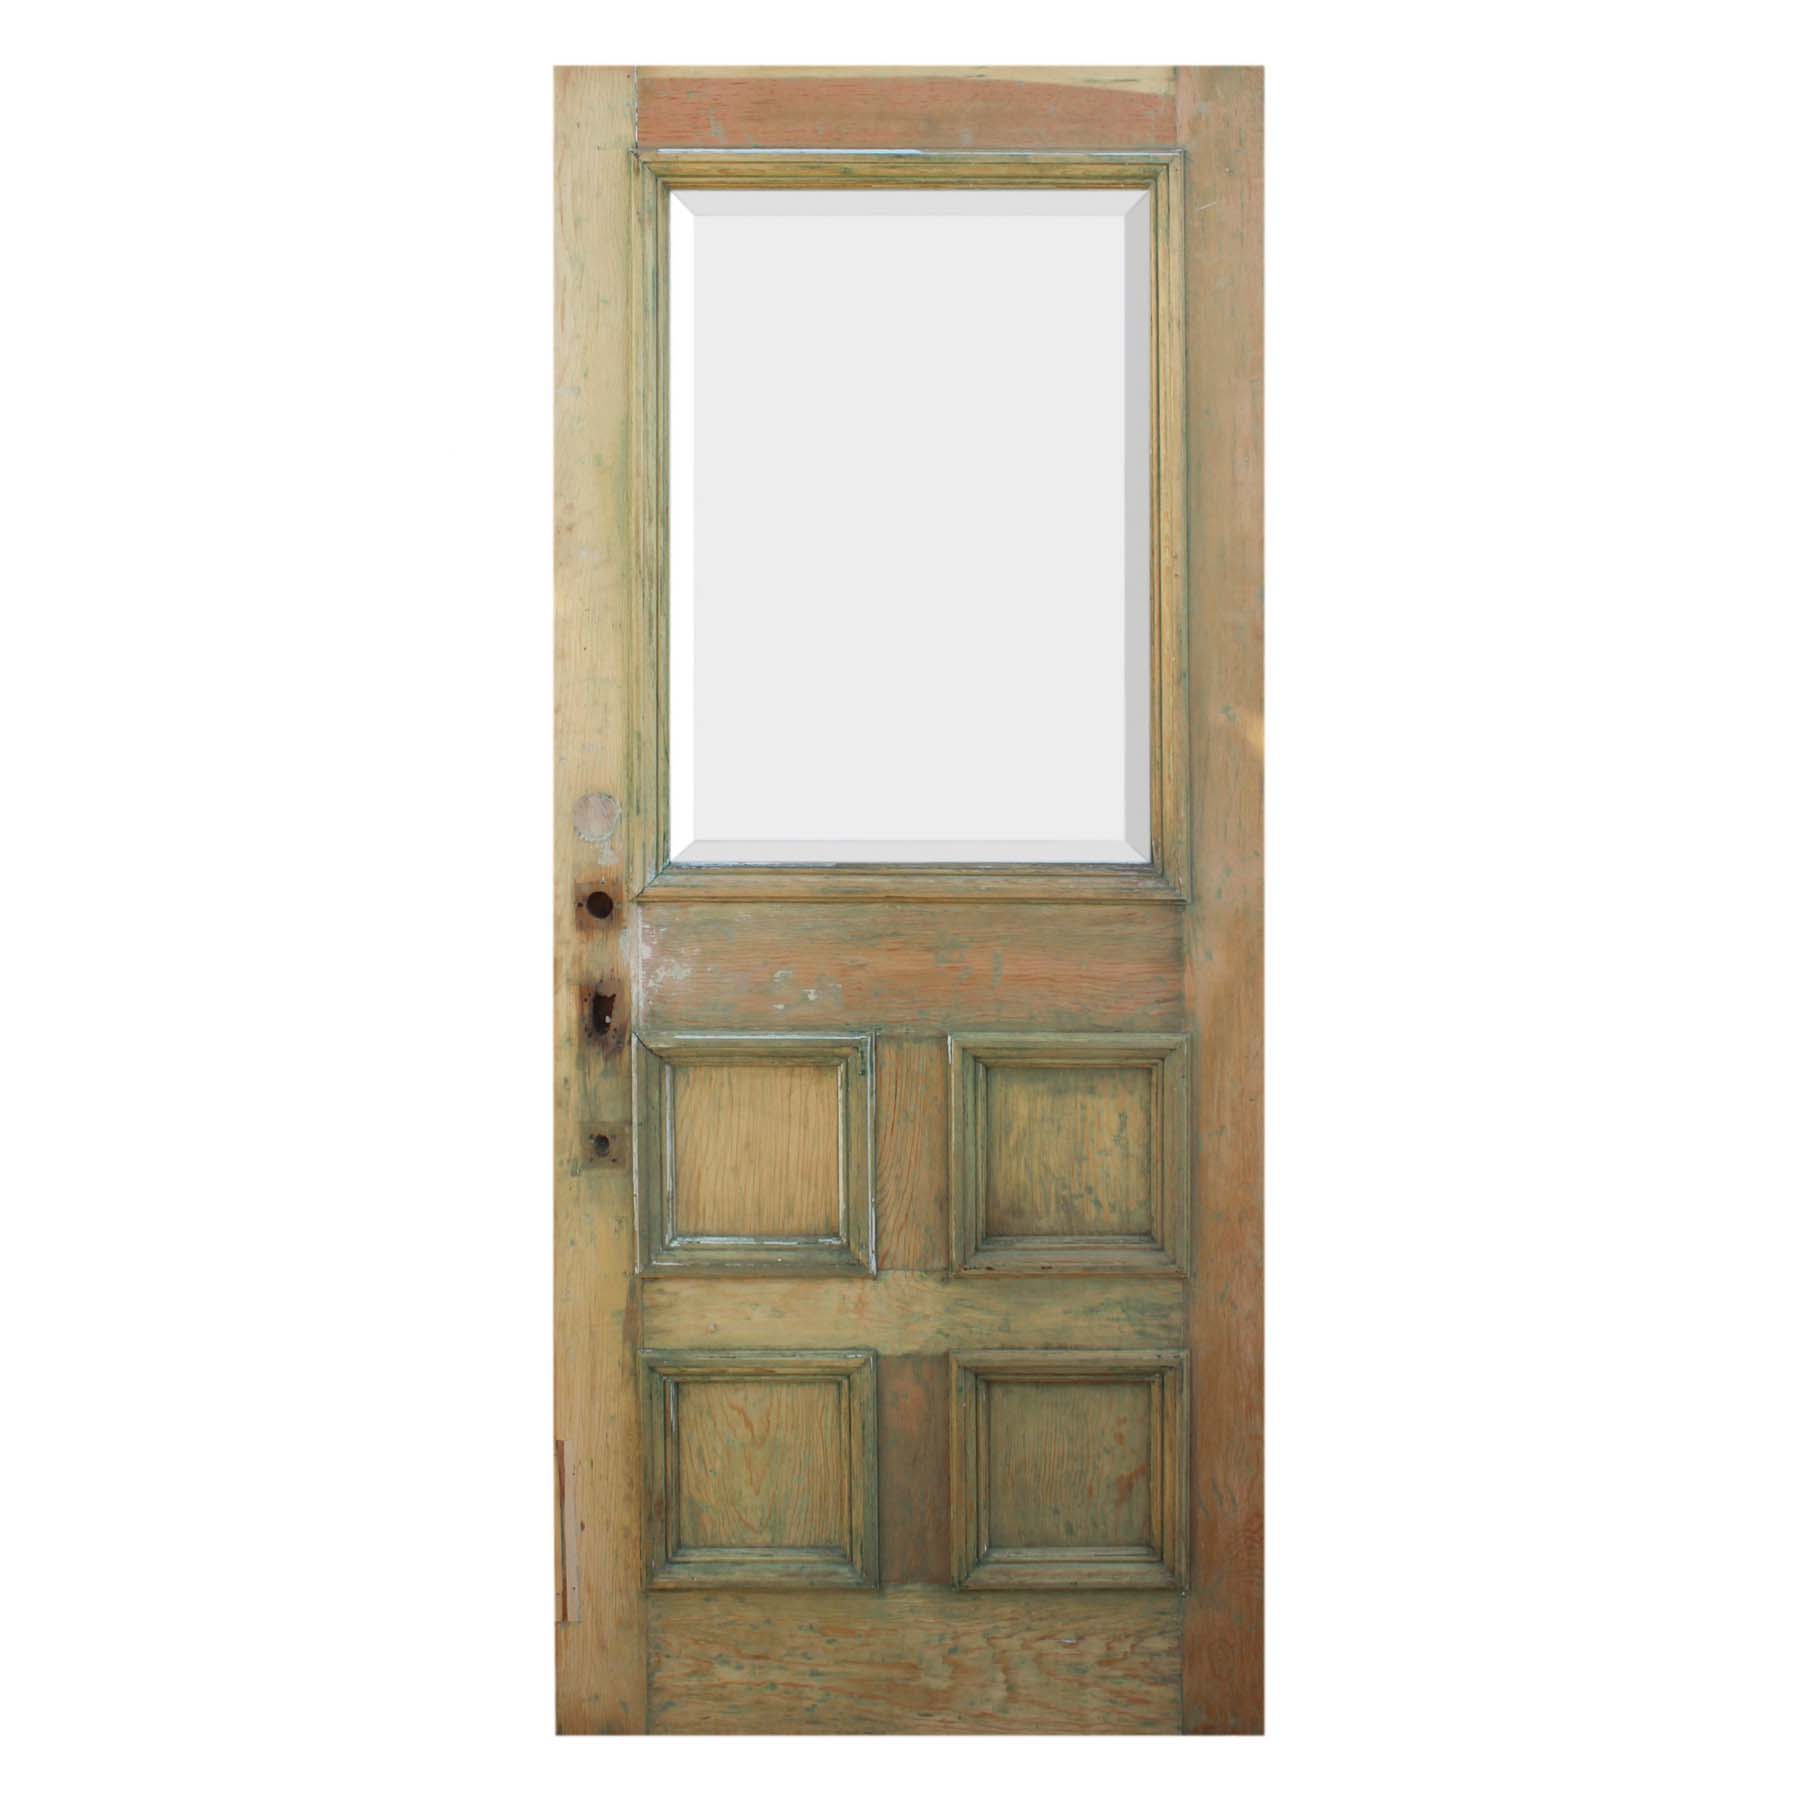 SOLD Reclaimed 36” Antique Farmhouse Door, Beveled Window -0